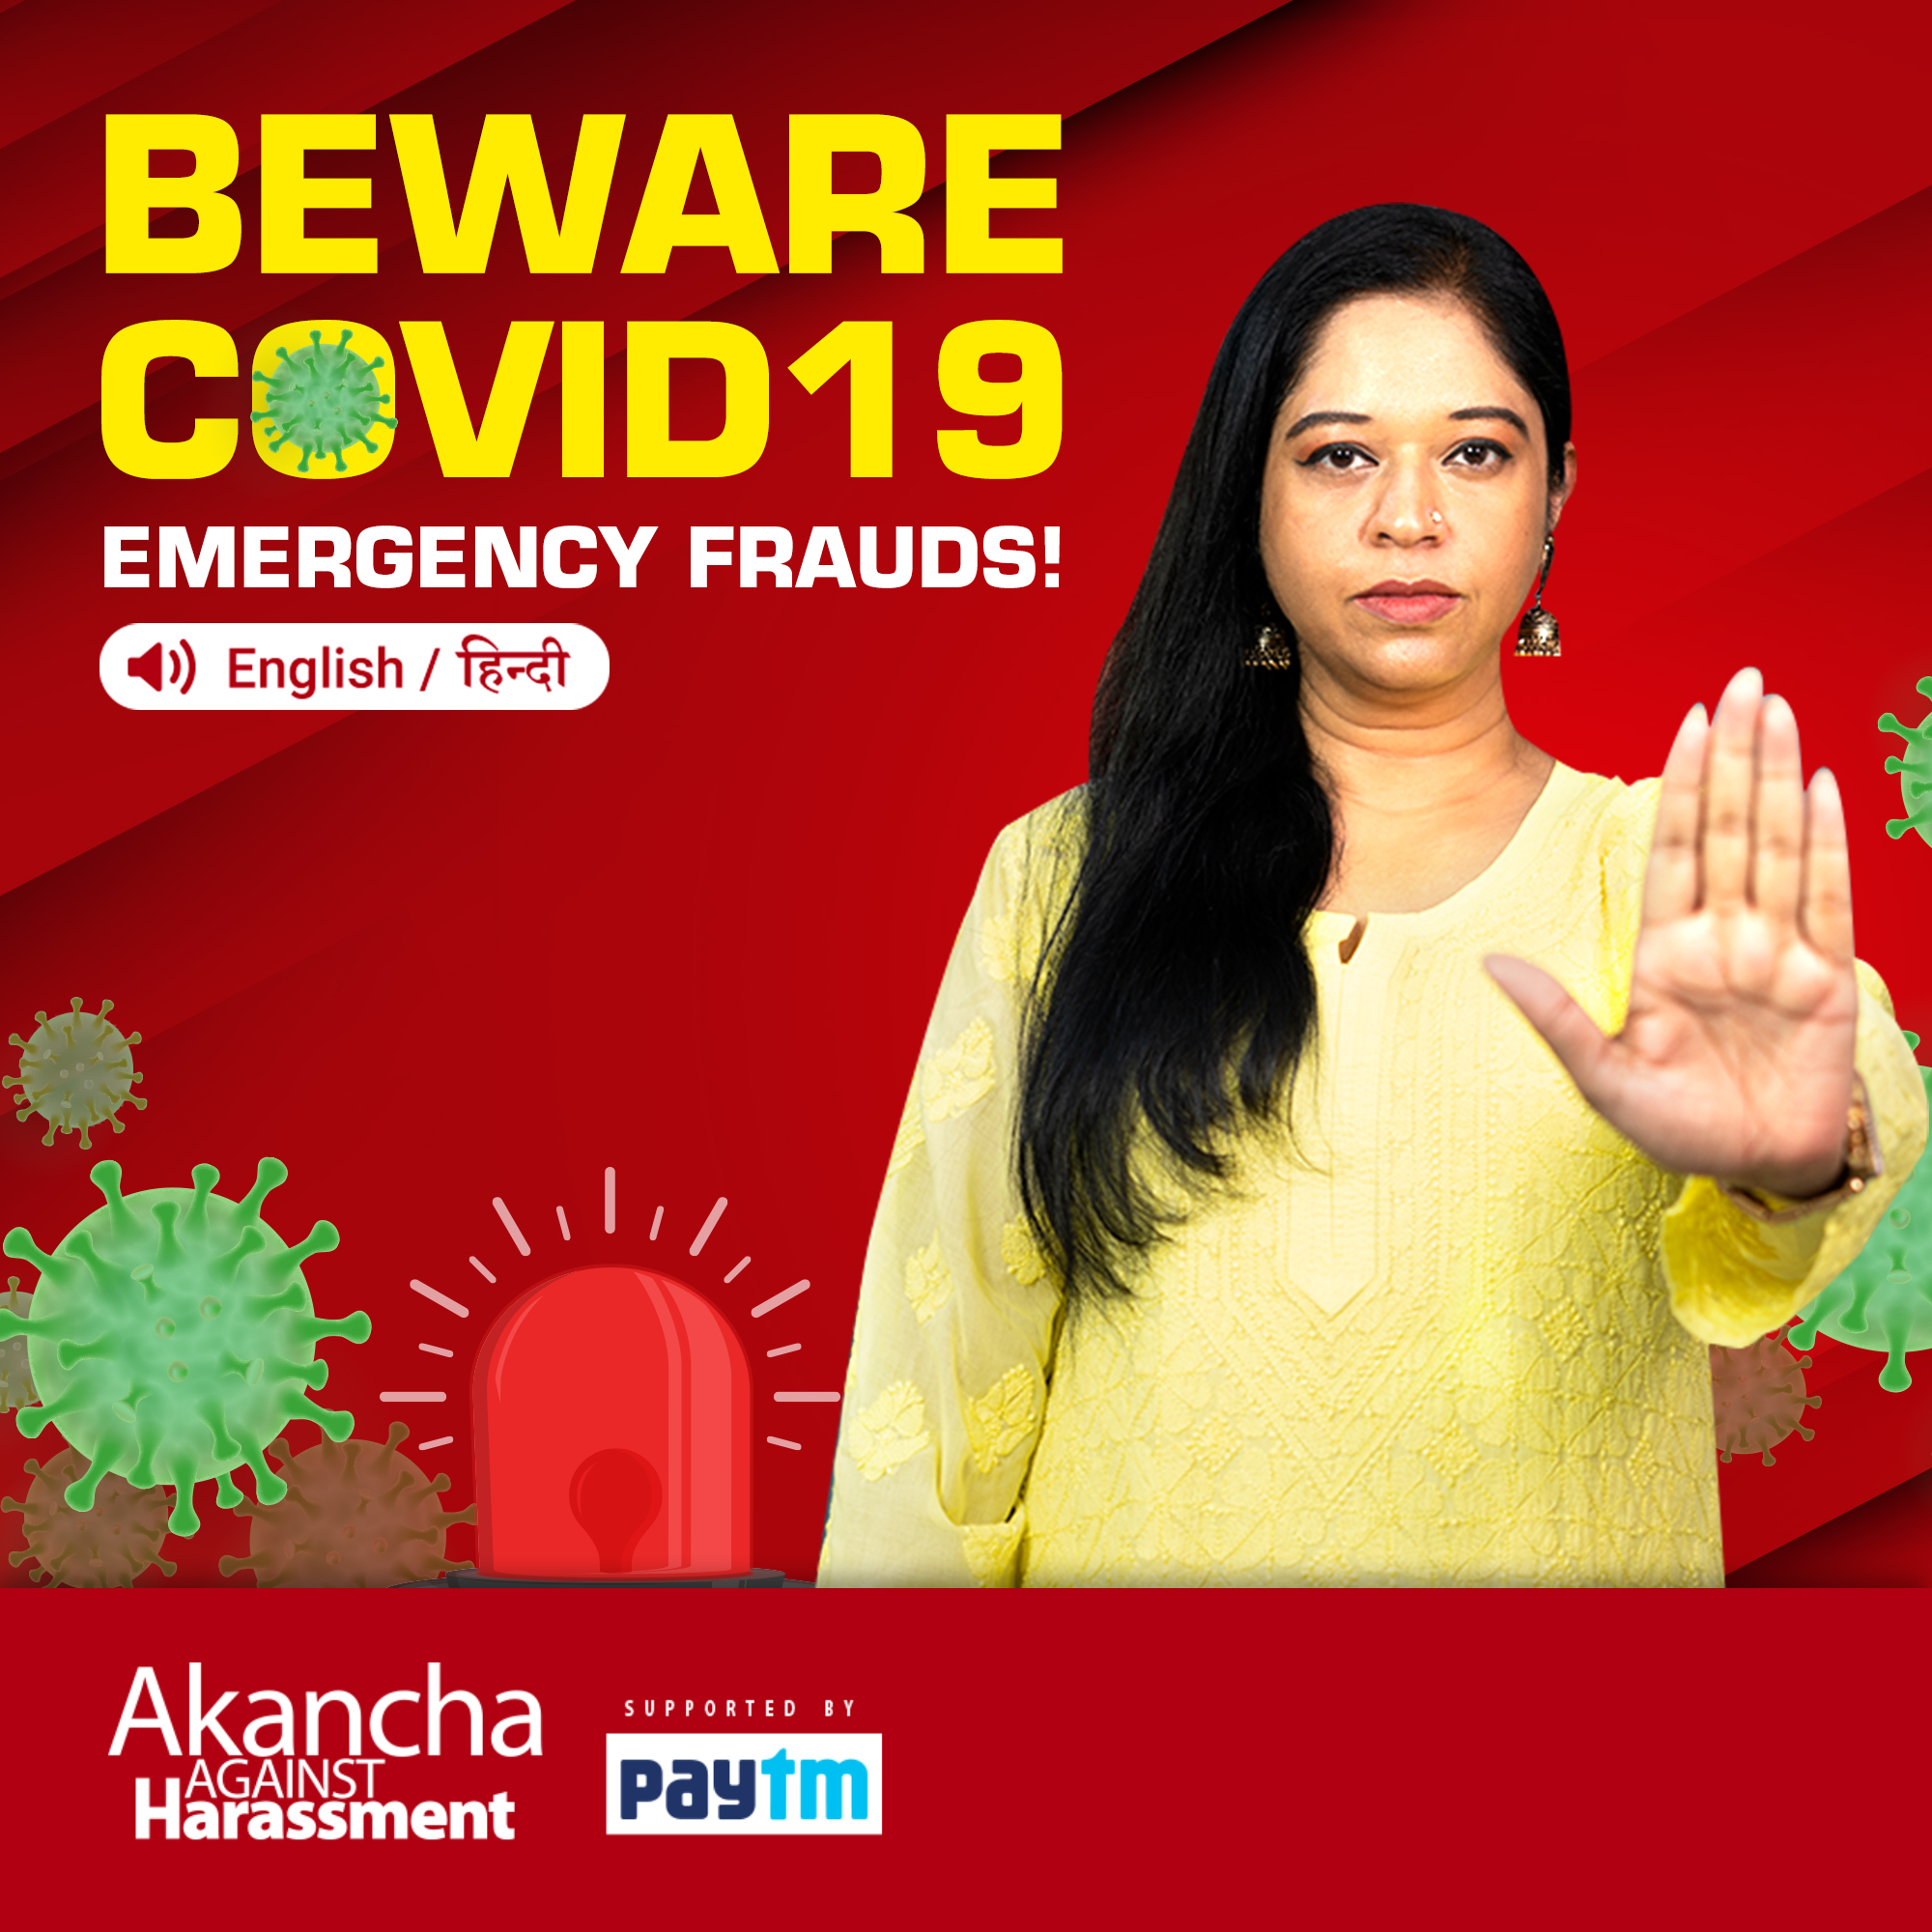 Beware Covid19 Emergency Frauds #AAH - Akancha Against Harassment